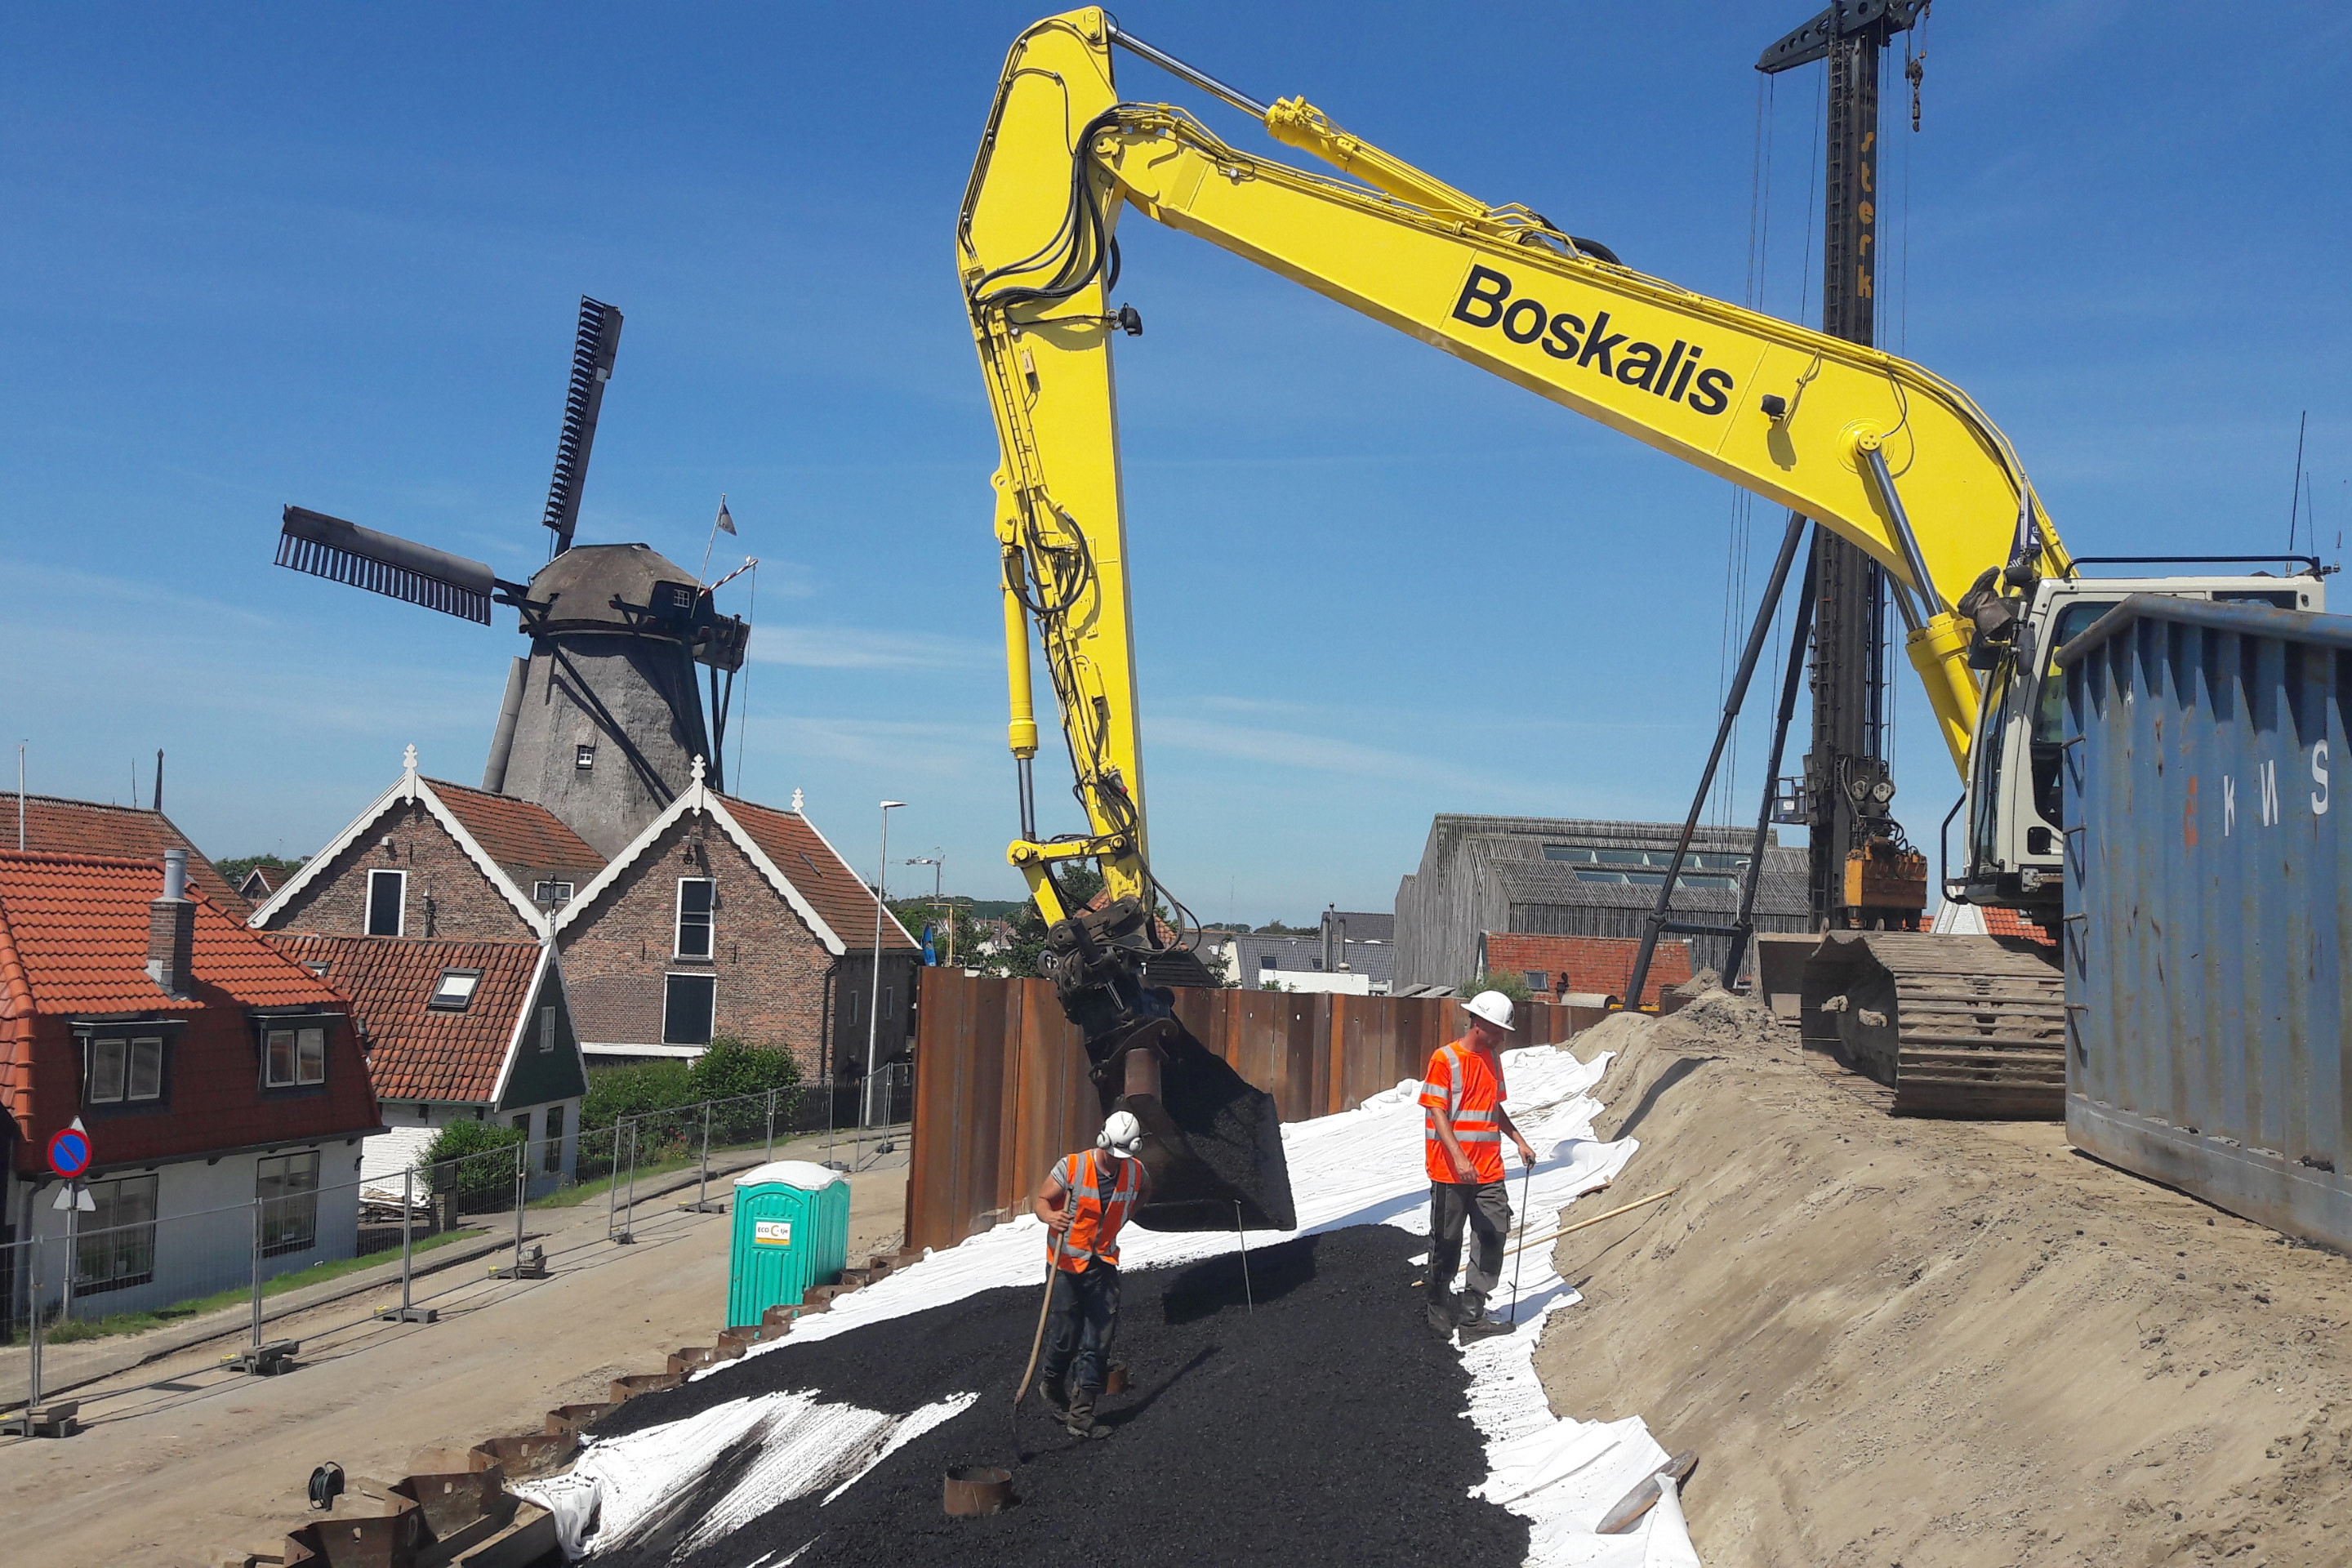 Dike upgrade activities on the island of Texel